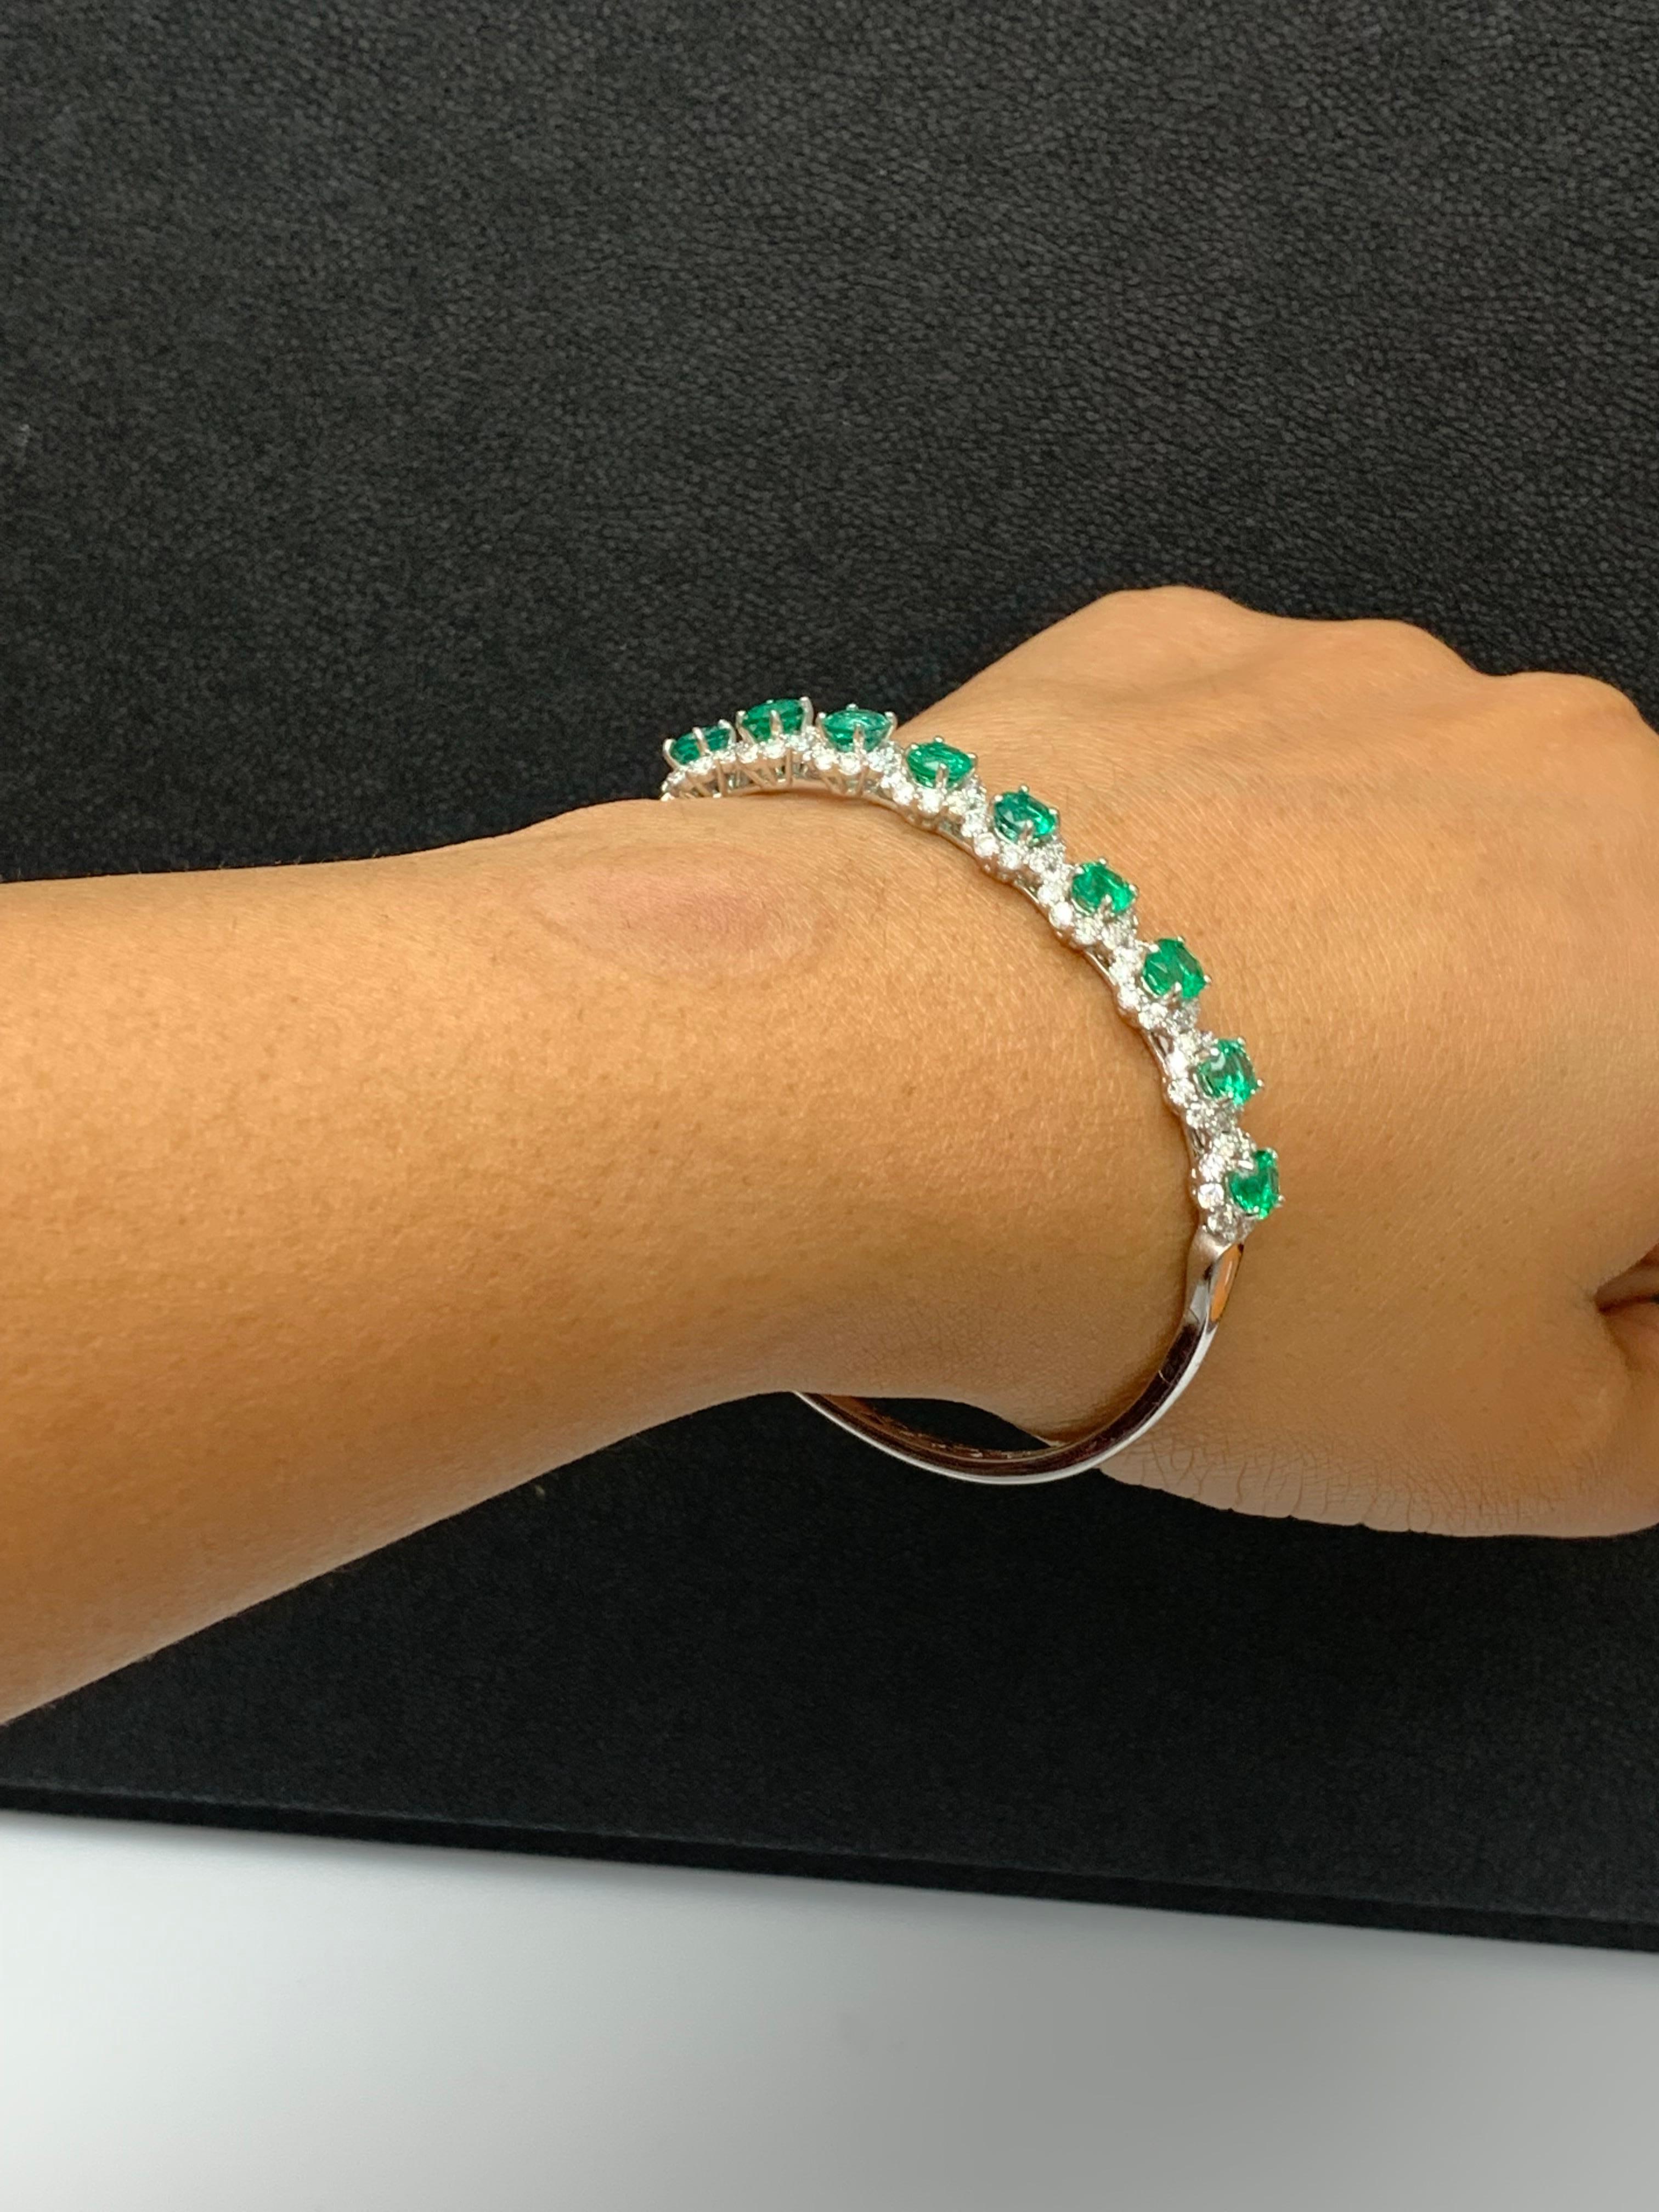 3.97 Carat Brilliant Cut Emerald and Diamond Bangle Bracelet in 18k White Gold For Sale 1